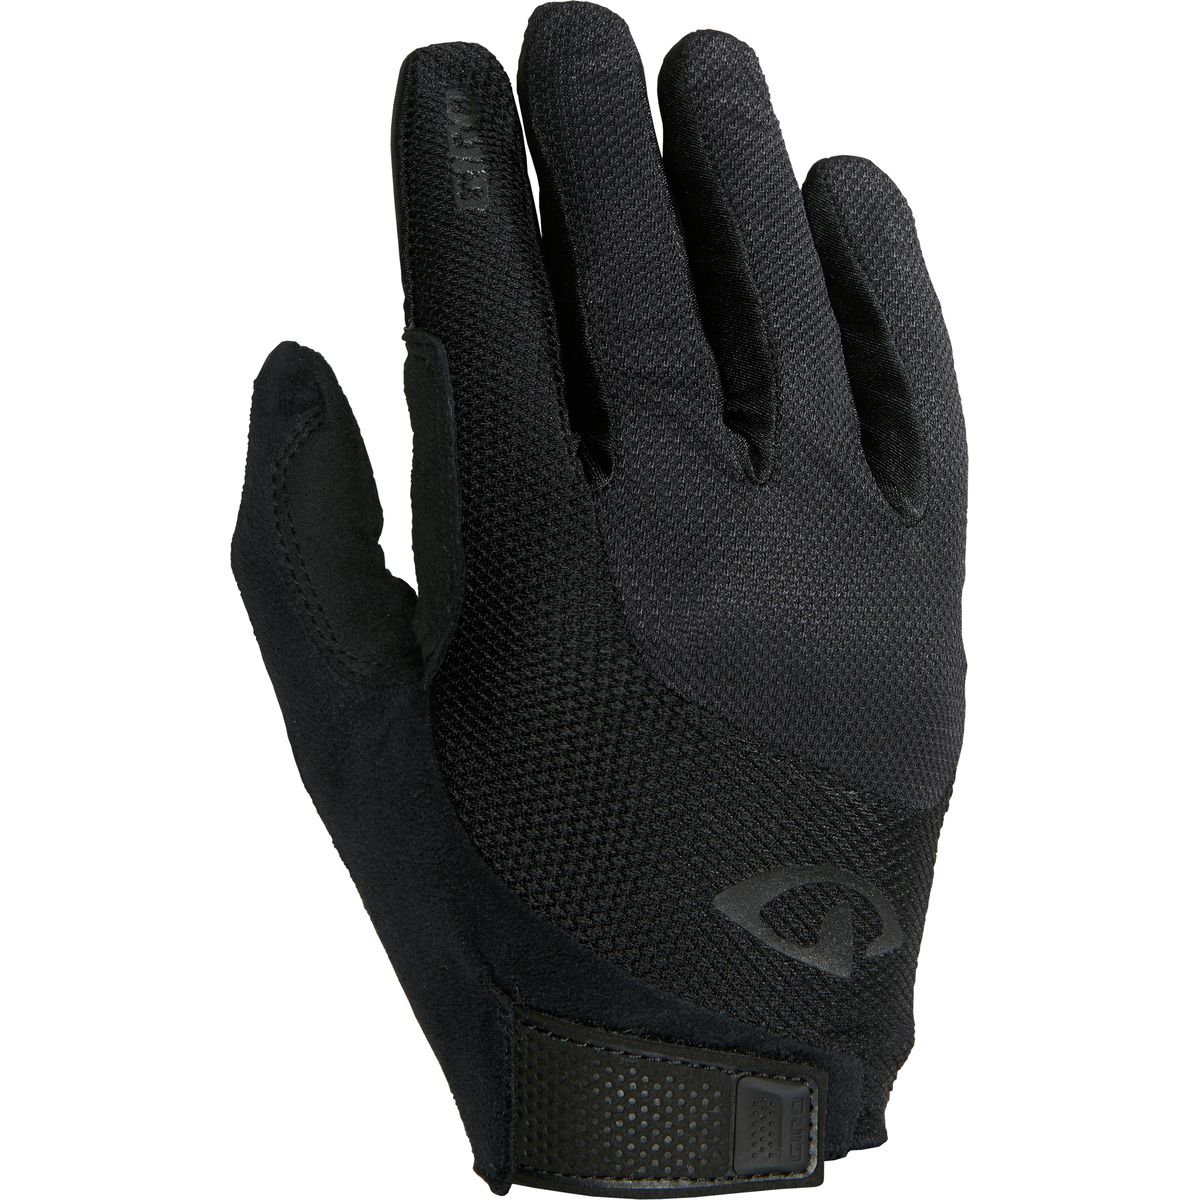 Giro Bravo Gel LF Glove - Men's Black, L